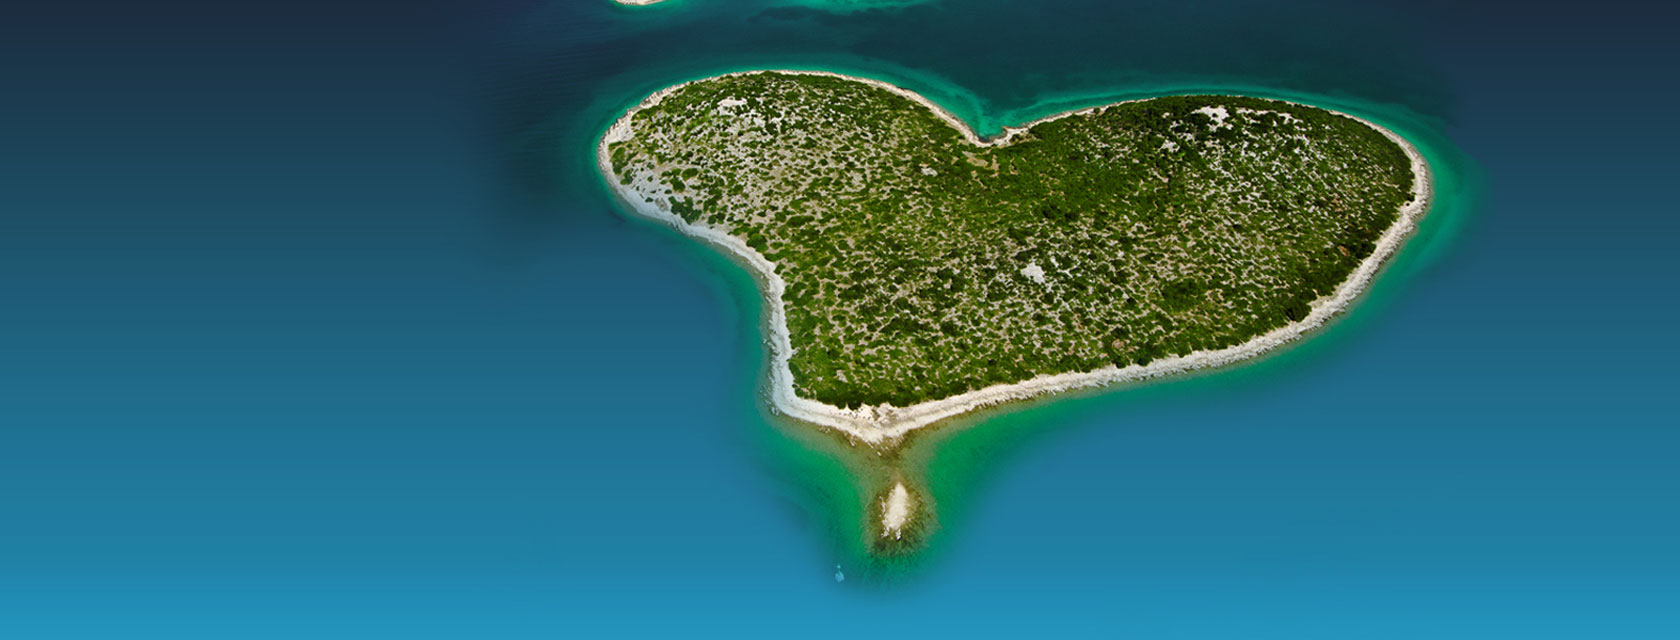 Остров любви Хорватия